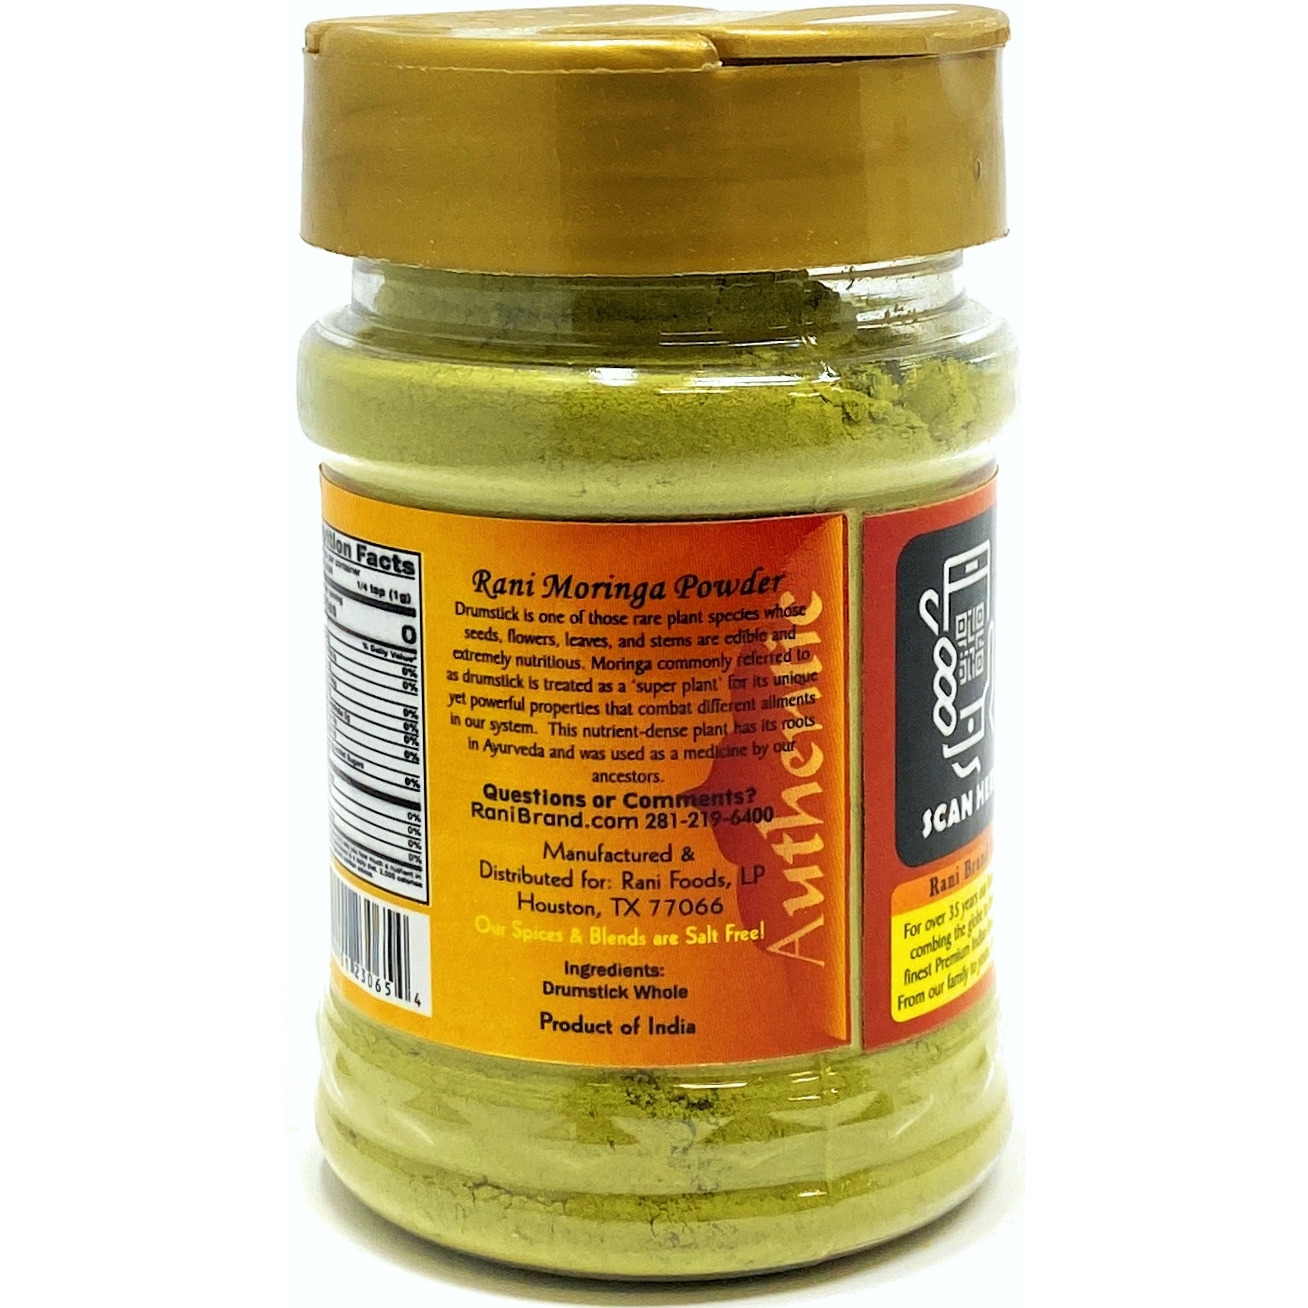 Rani Moringa Powder (Drumstick Powder) 2.46oz (70g) PET Jar ~ 100% Natural | Vegan | Gluten Friendly | NON-GMO | No colors | Indian Origin